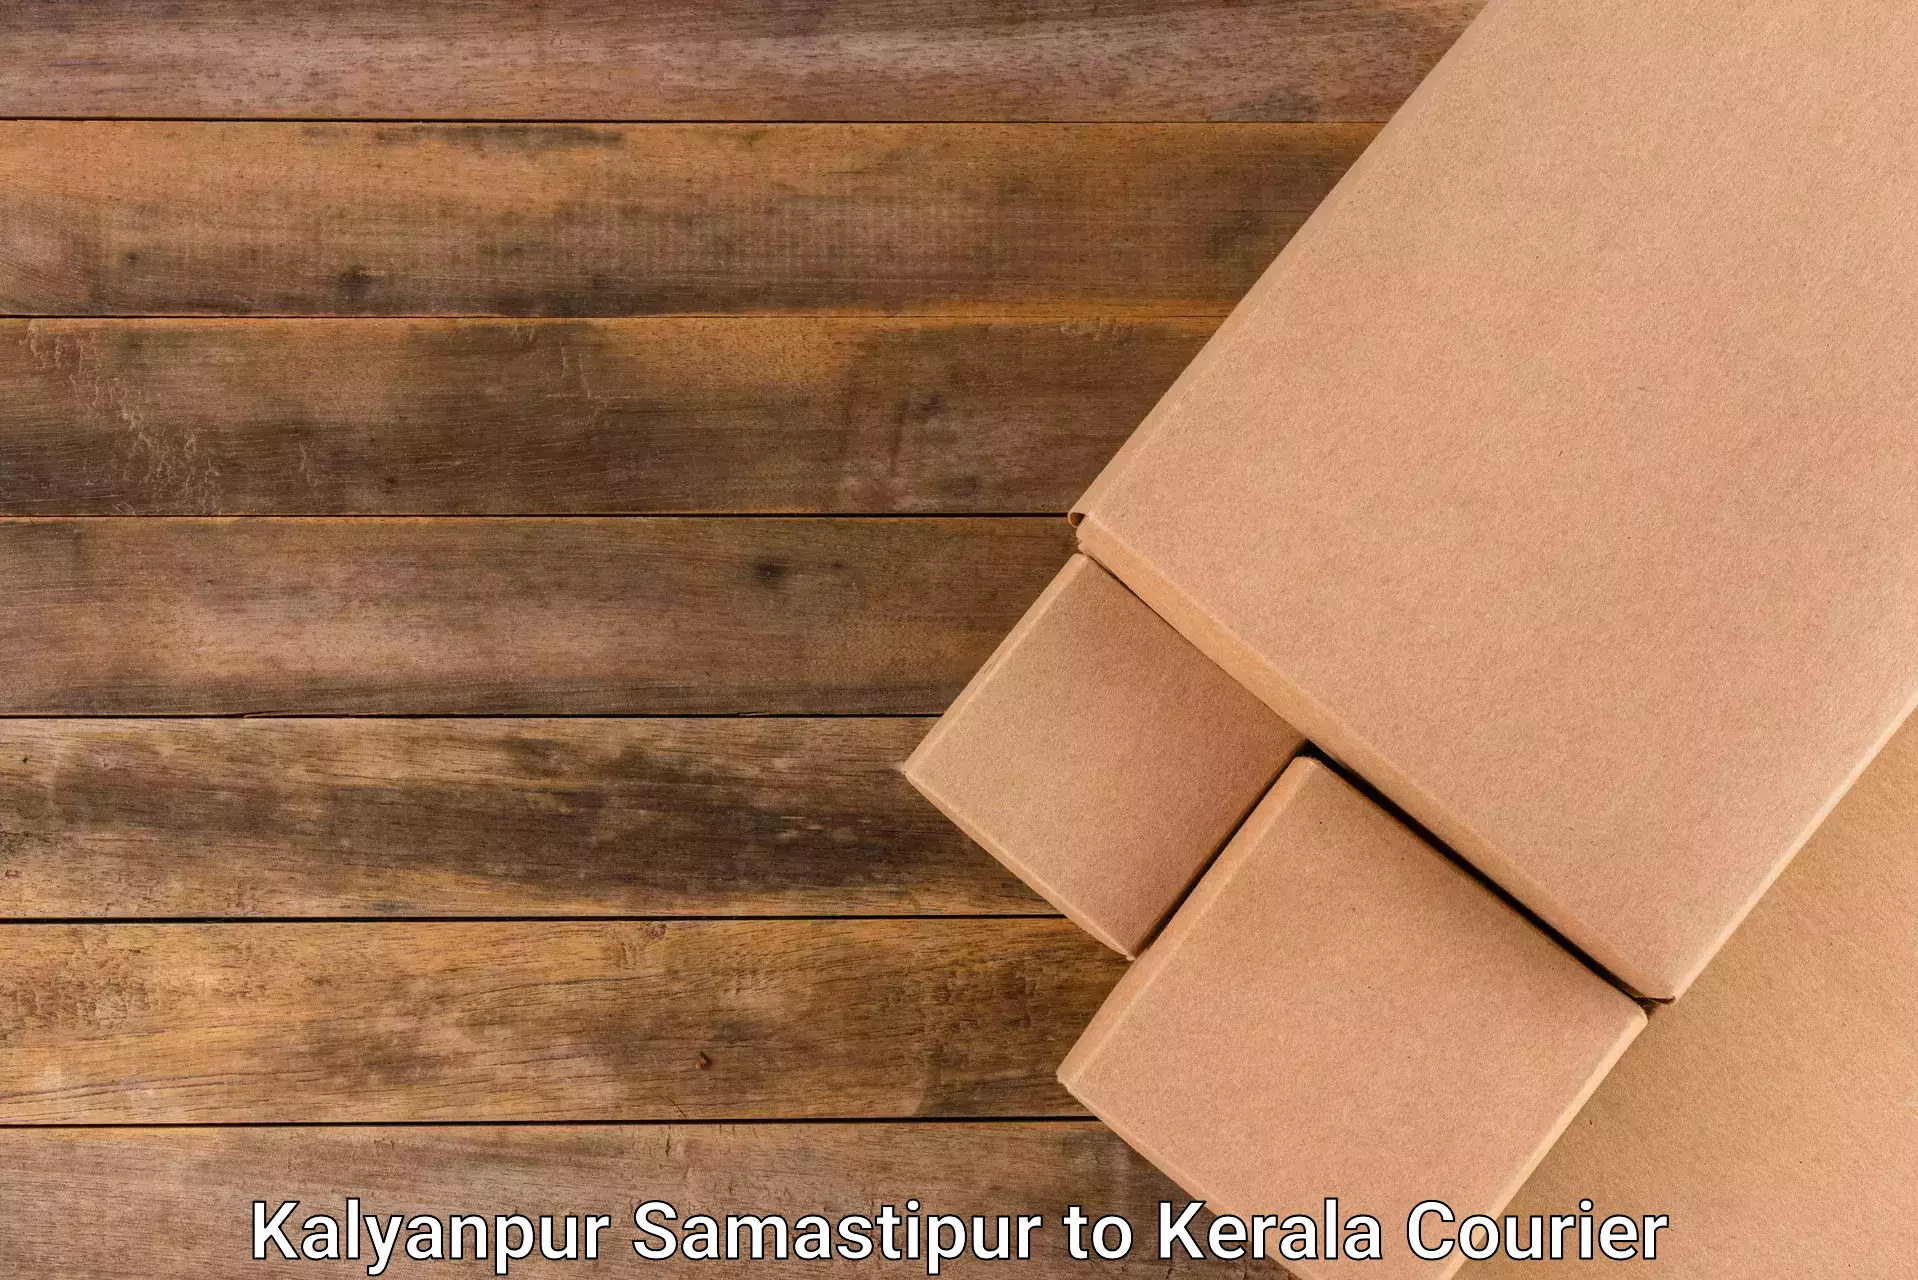 Cash on delivery service Kalyanpur Samastipur to Ponekkara